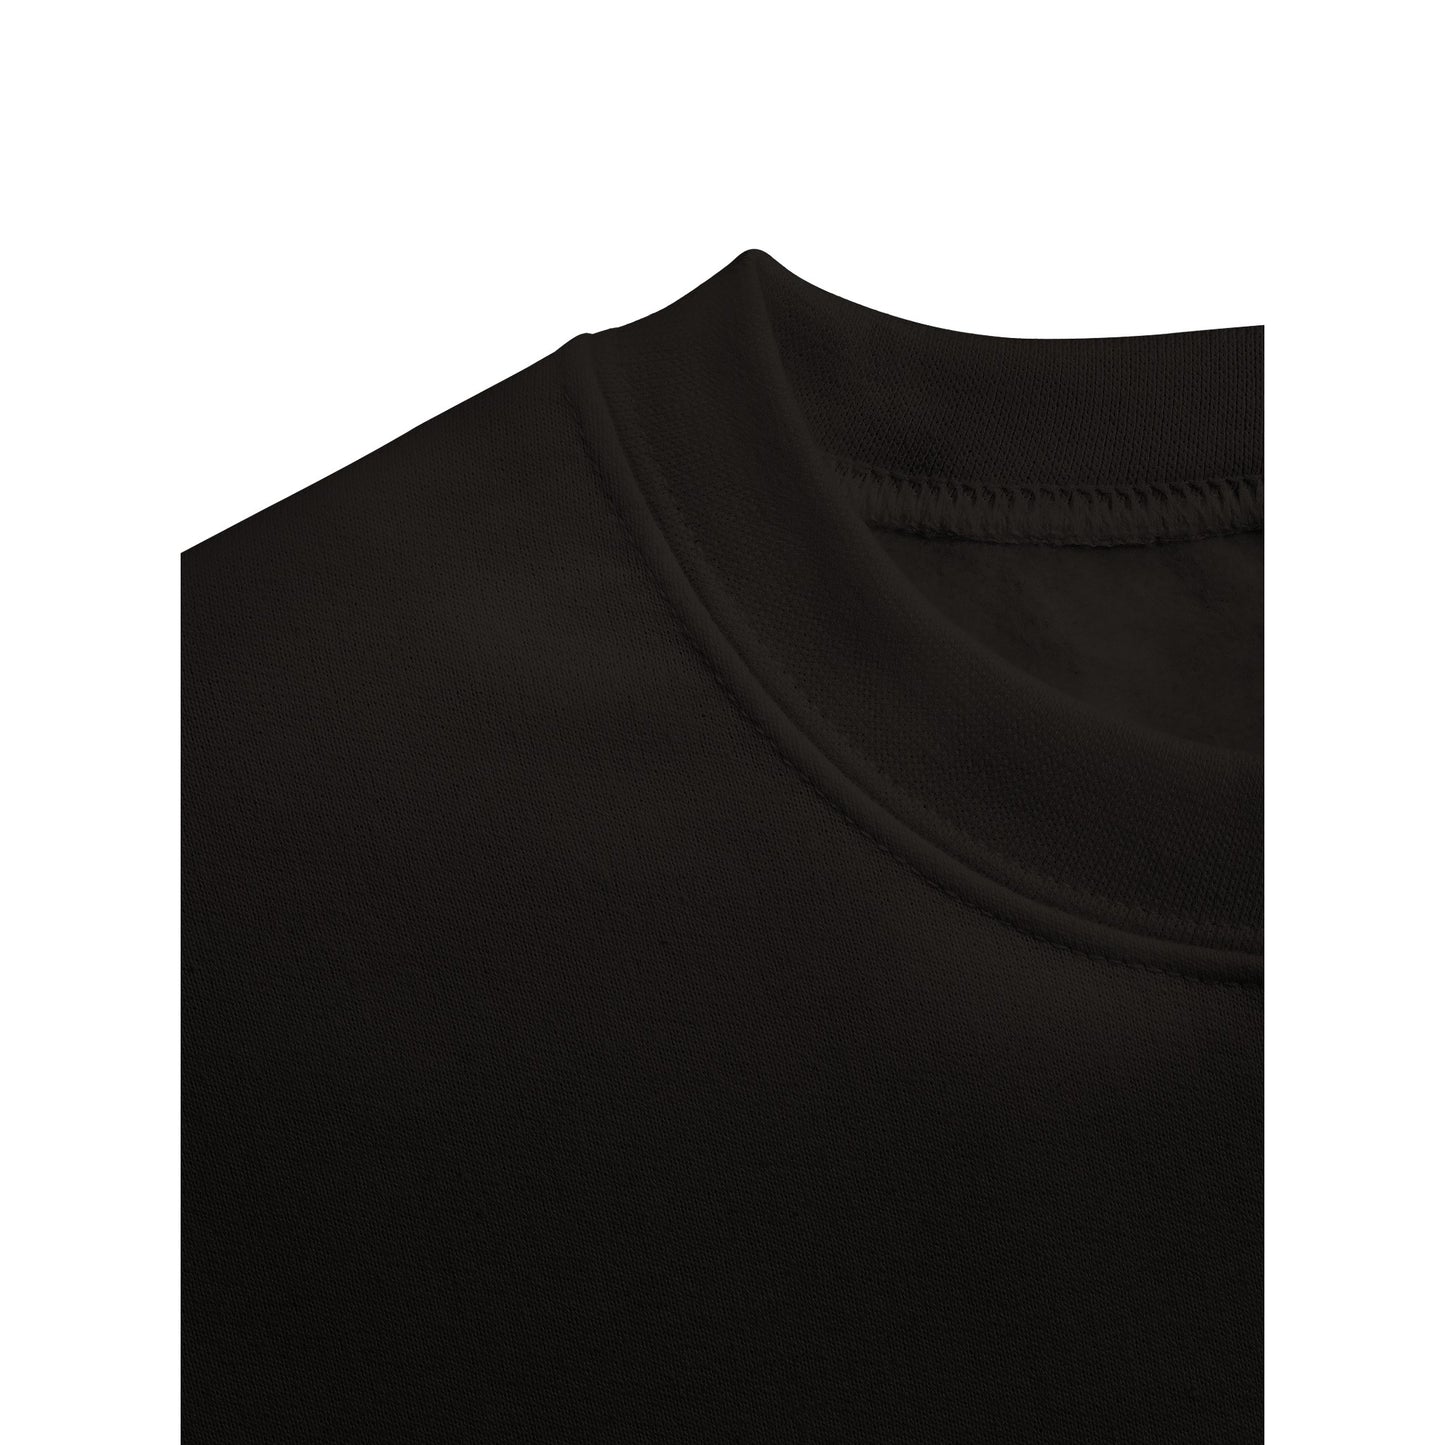 distortion / Gallery Staff Collection / Sweatshirt / black